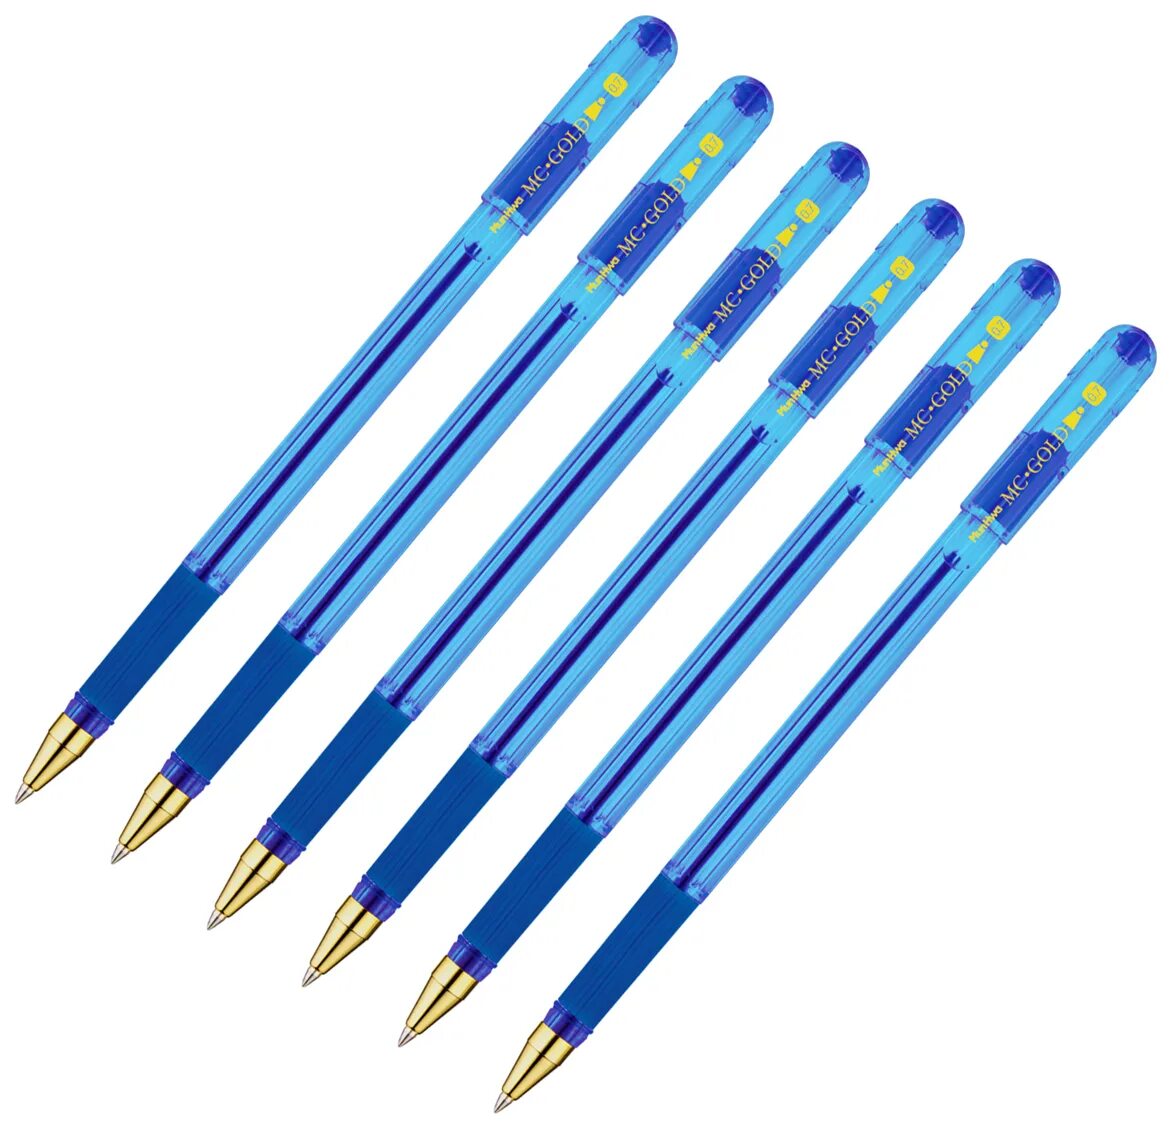 Mc gold ручка. MUNHWA ручка шариковая MC Gold. Ручка шариковая MUNHWA MC Gold синяя 0.5мм. Ручка MC Gold 0.5 синяя. Ручка МС Голд 0.5.